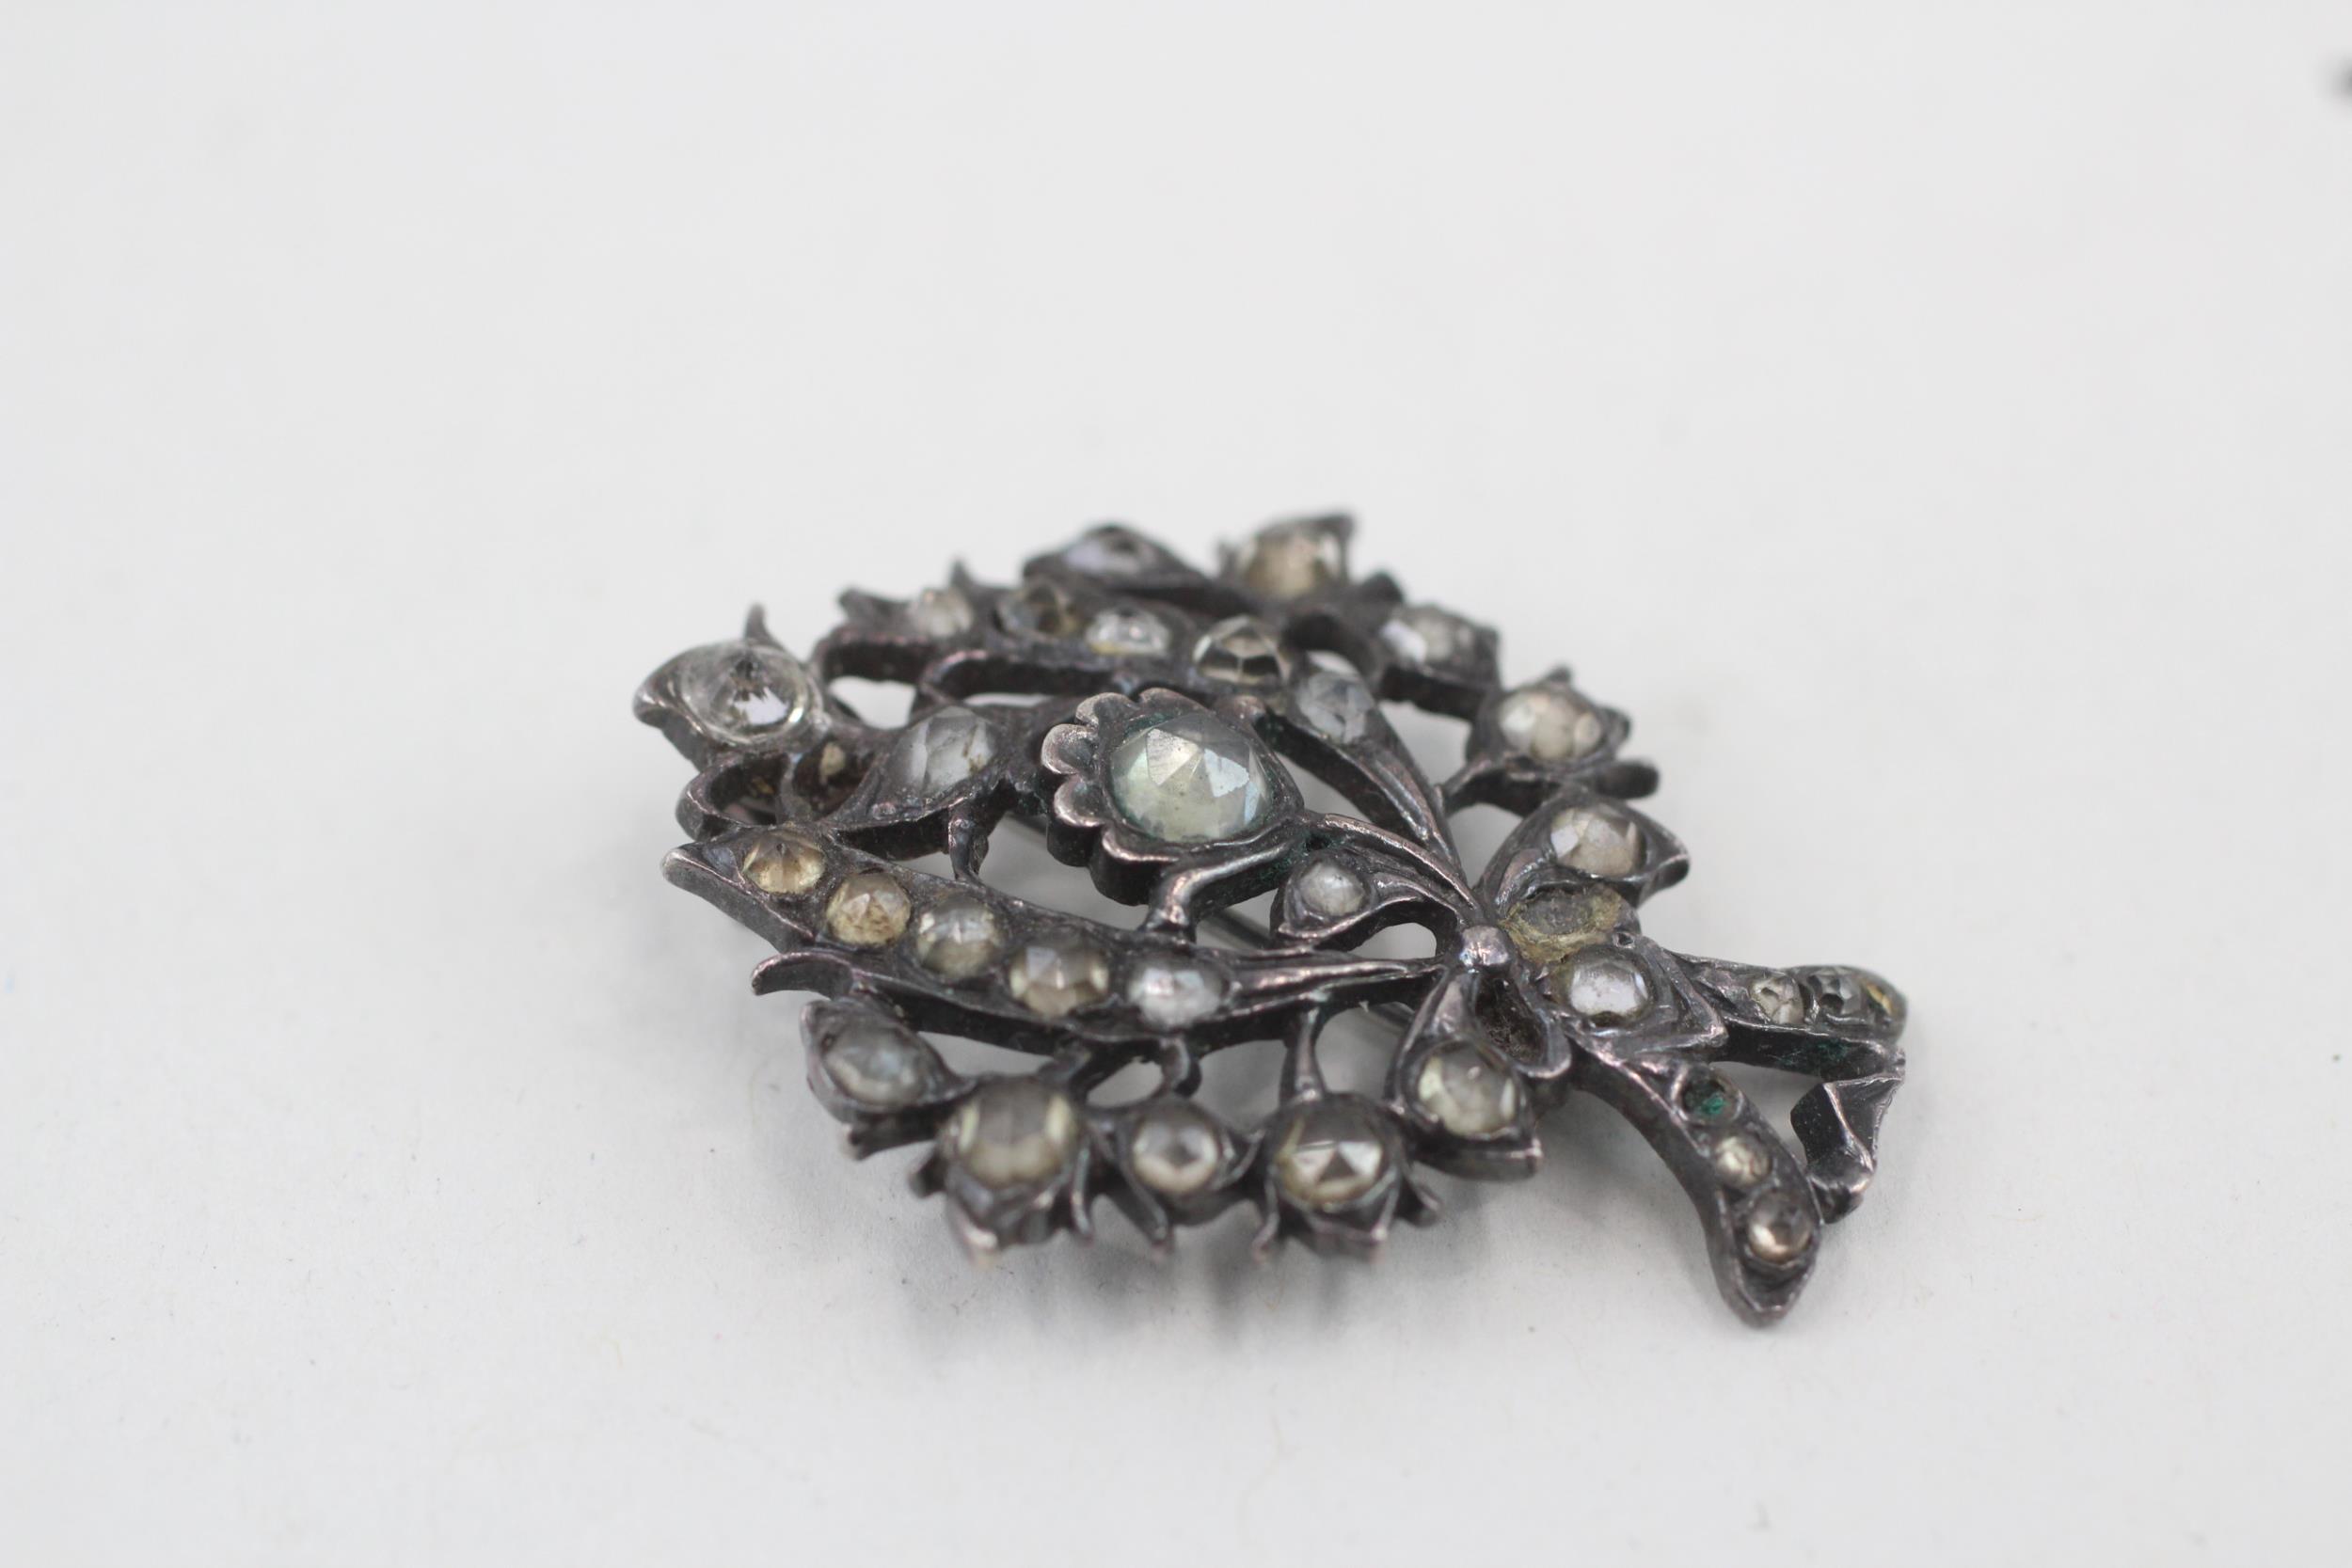 Silver 19th century Iberian old cut gemstone brooch (7g) - Image 5 of 8